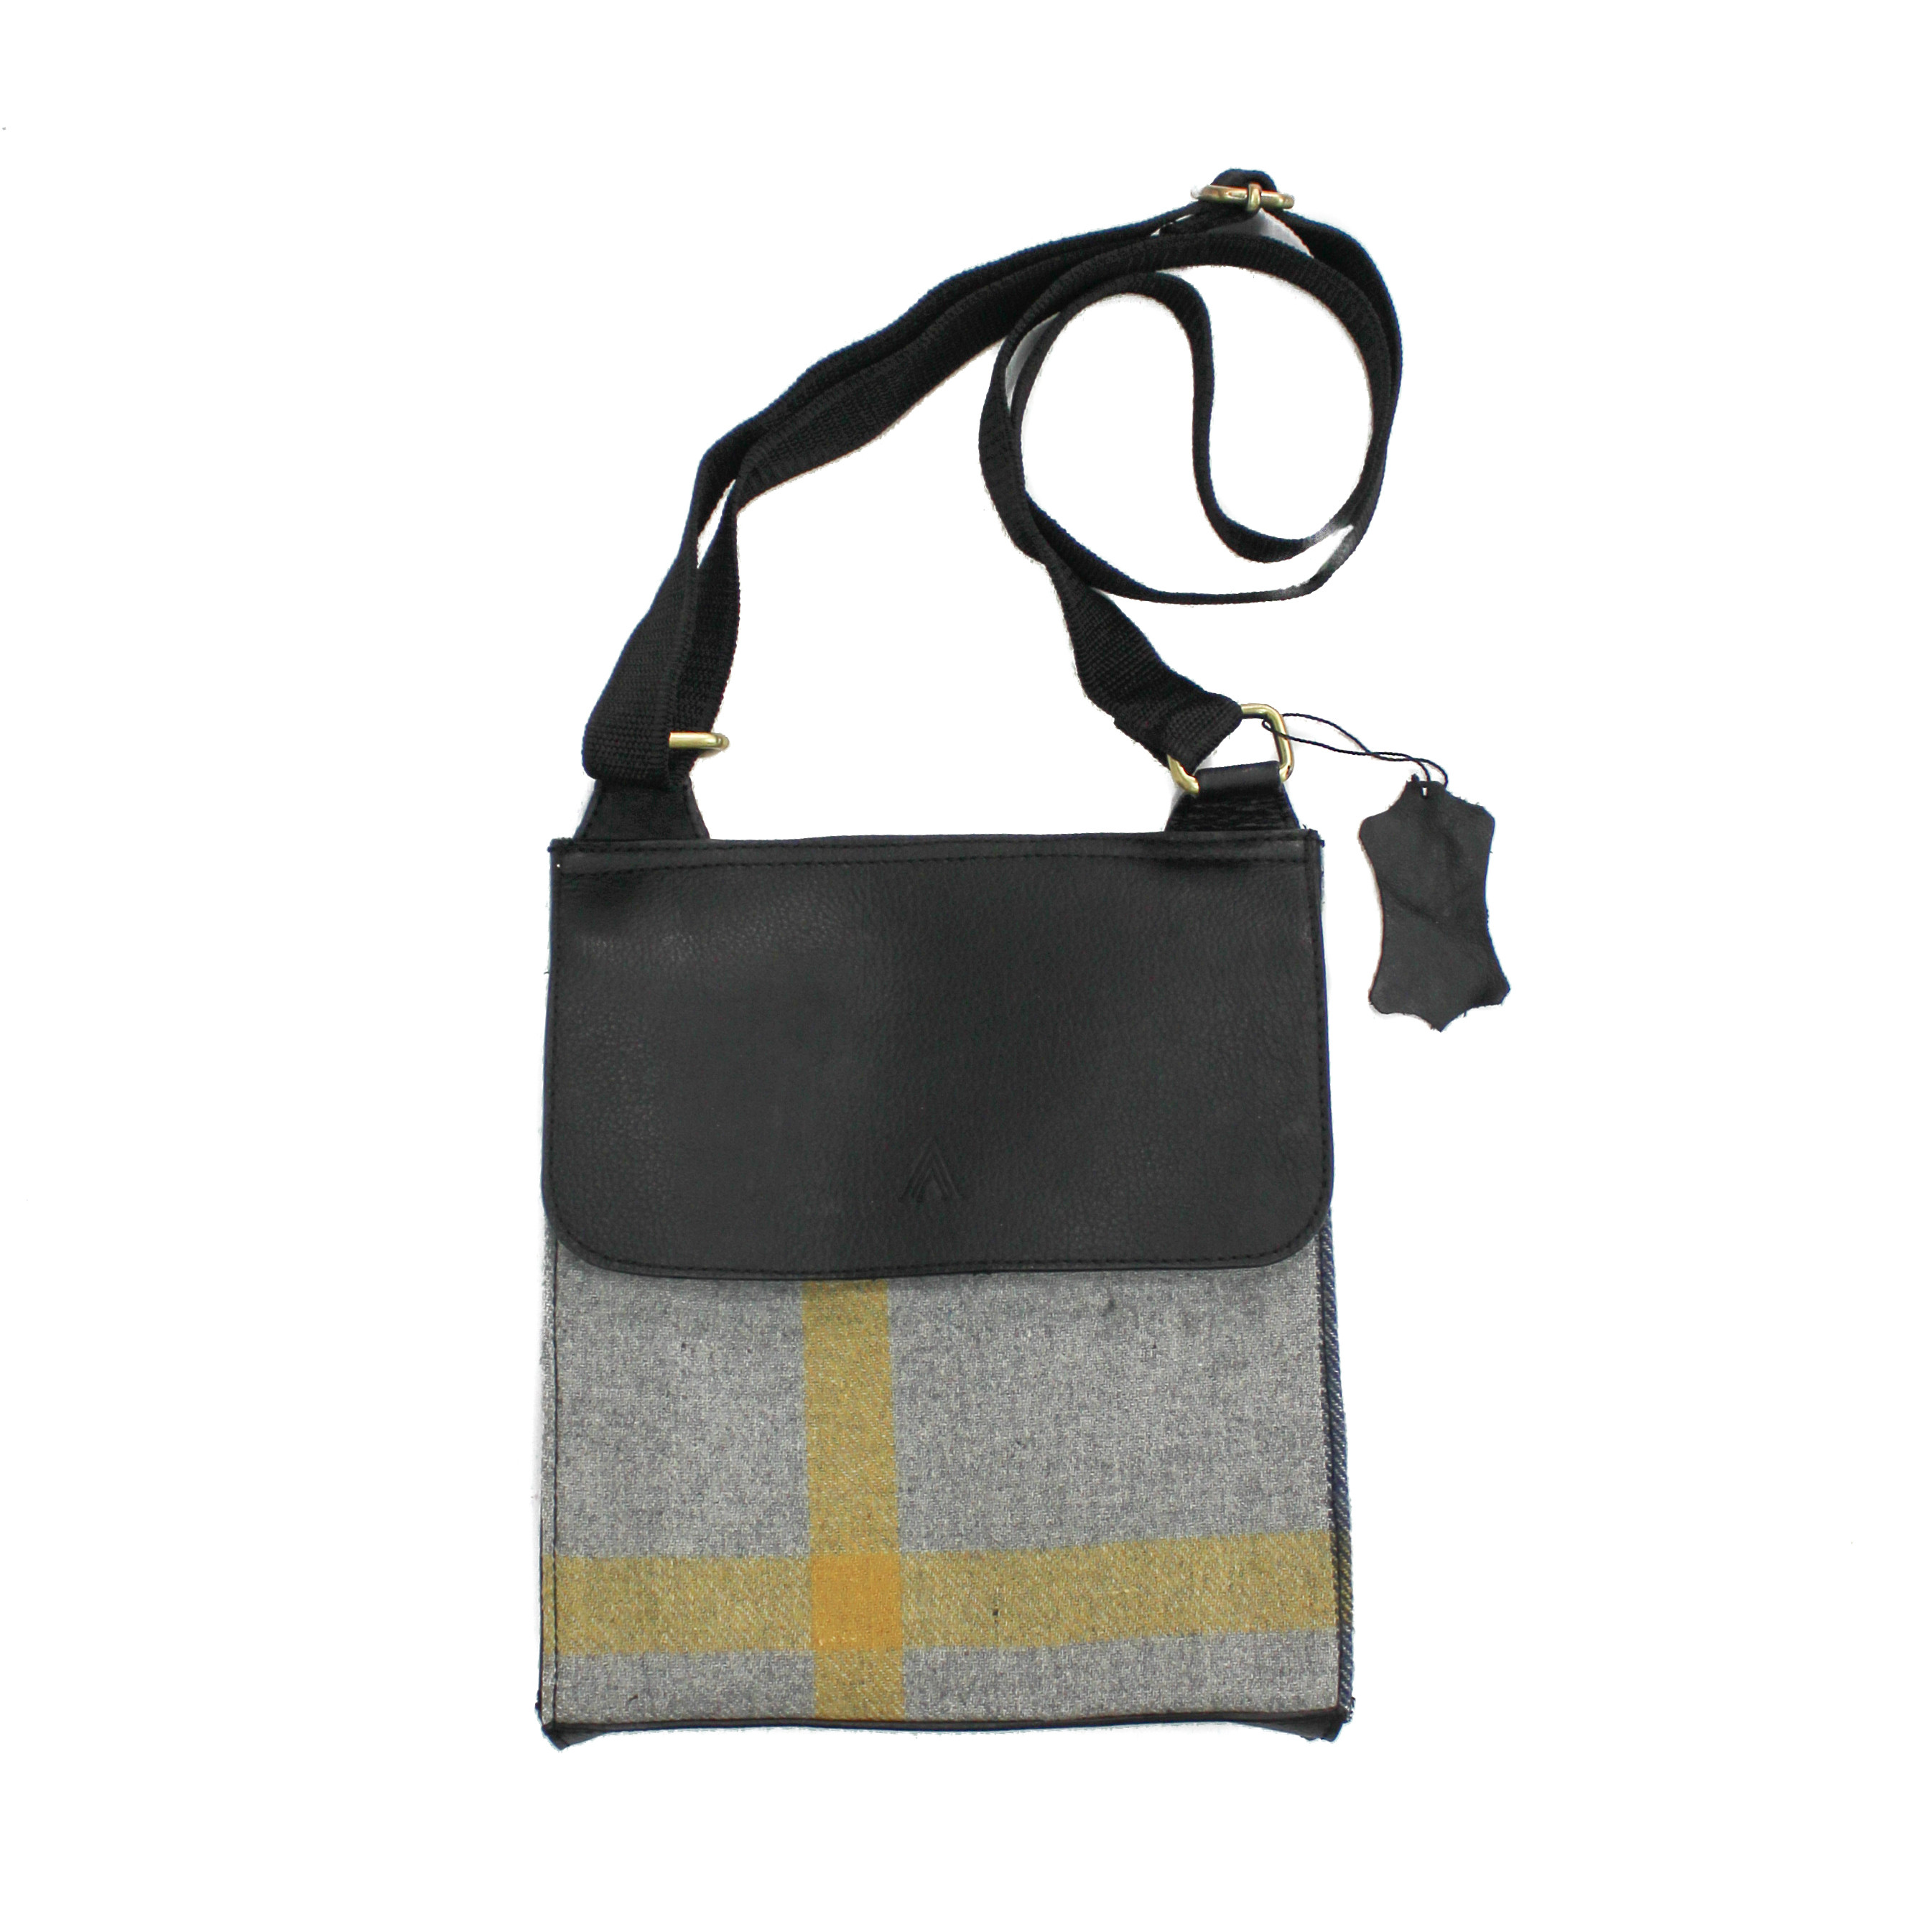 Buy LOMOND LM53 Shoulder Bag (Camo Beige/Olive Green) at Amazon.in